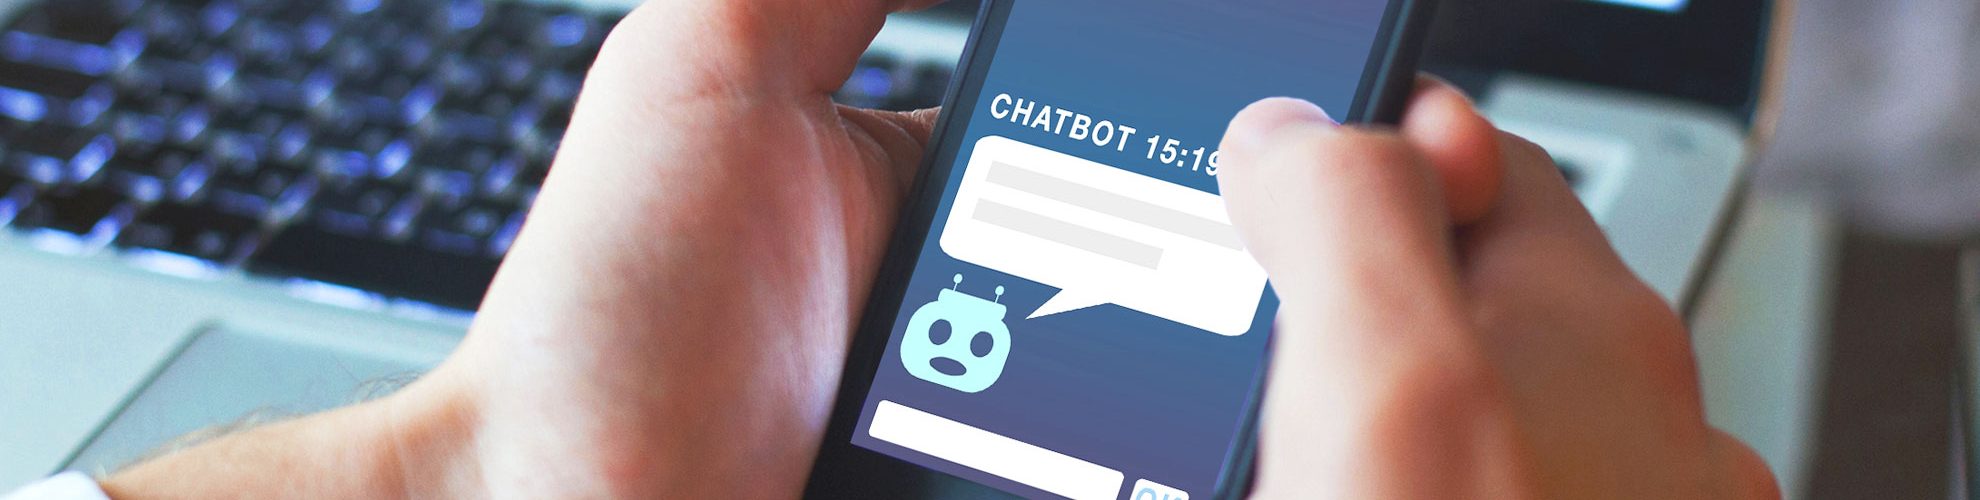 chatbot-assistenza-clienti-zucchetti